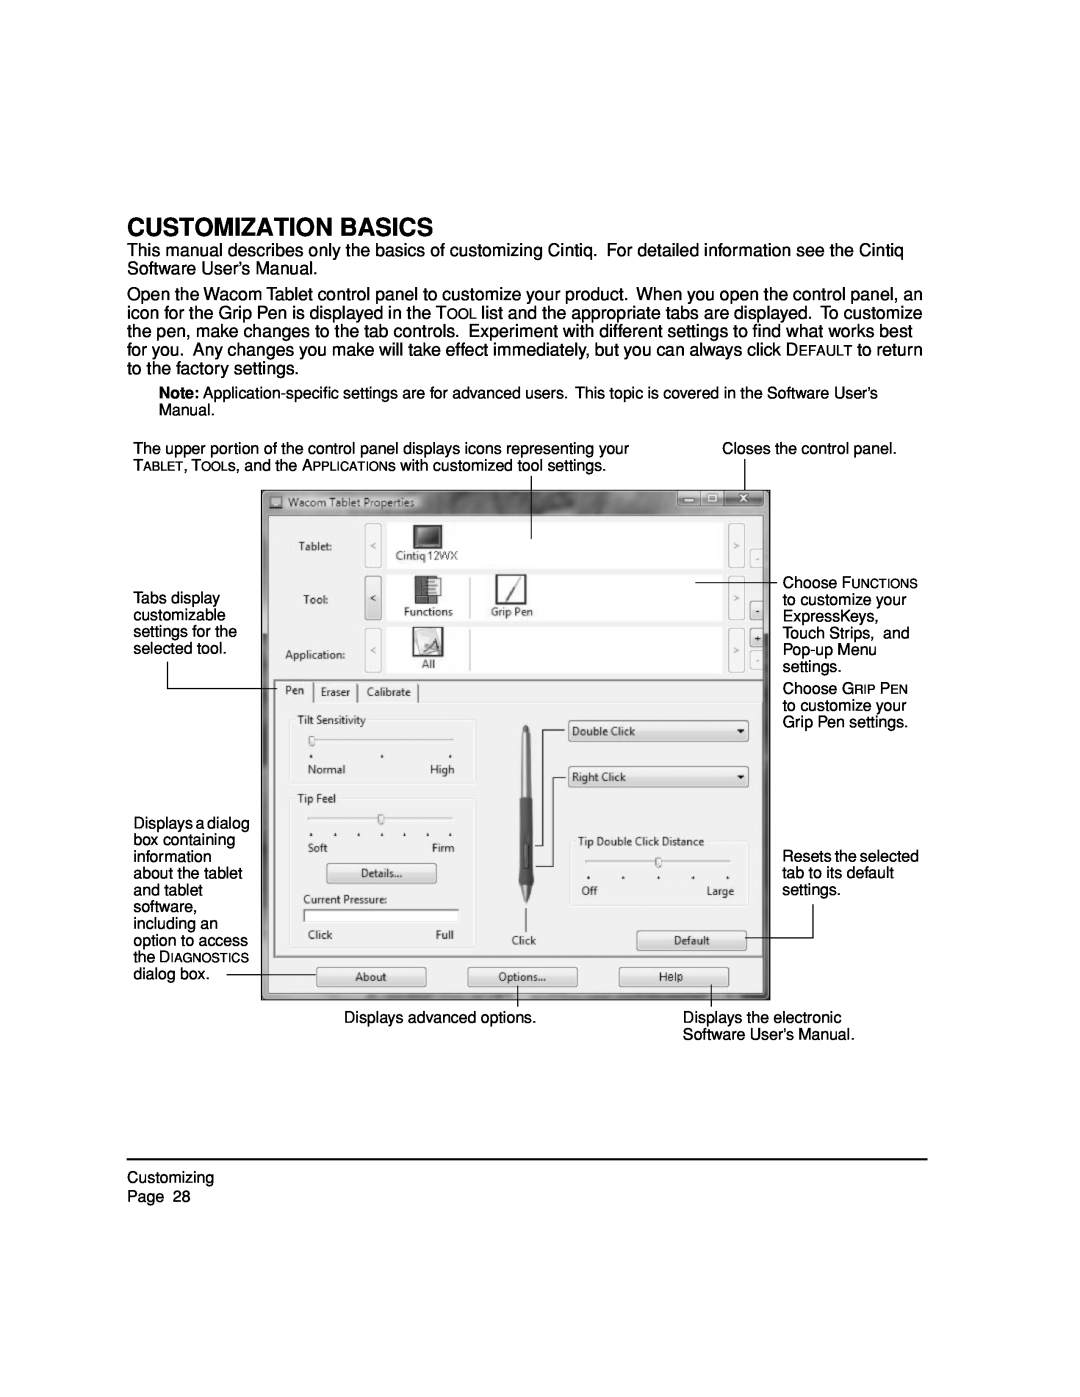 Wacom 12WX, DTZ-1200W manual Customization Basics, Closes the control panel, Software User’s Manual 